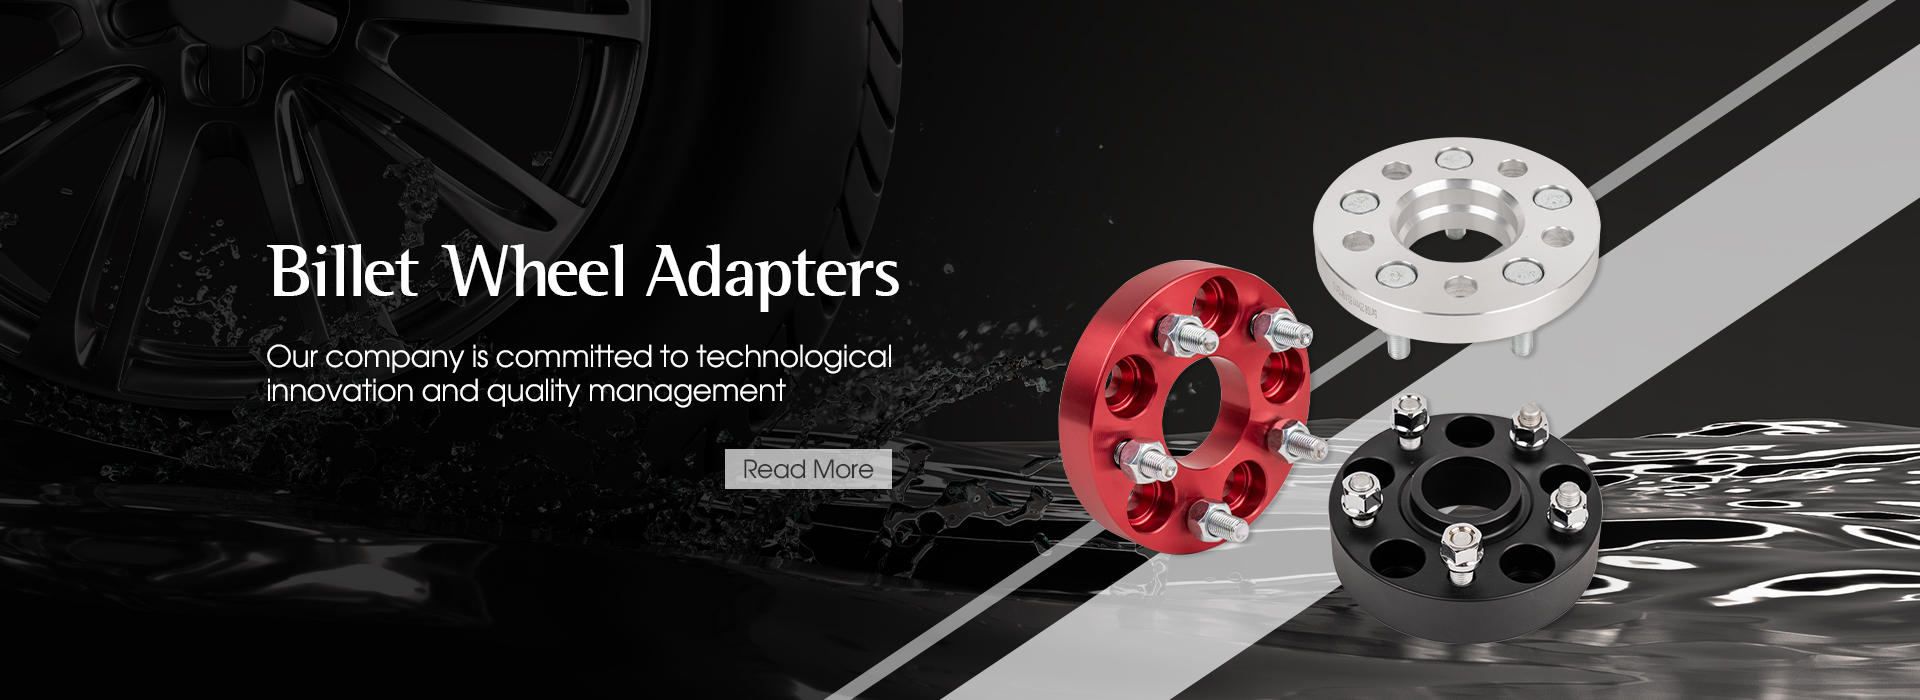 Fabricantes de adaptadores de rueda Billet de China